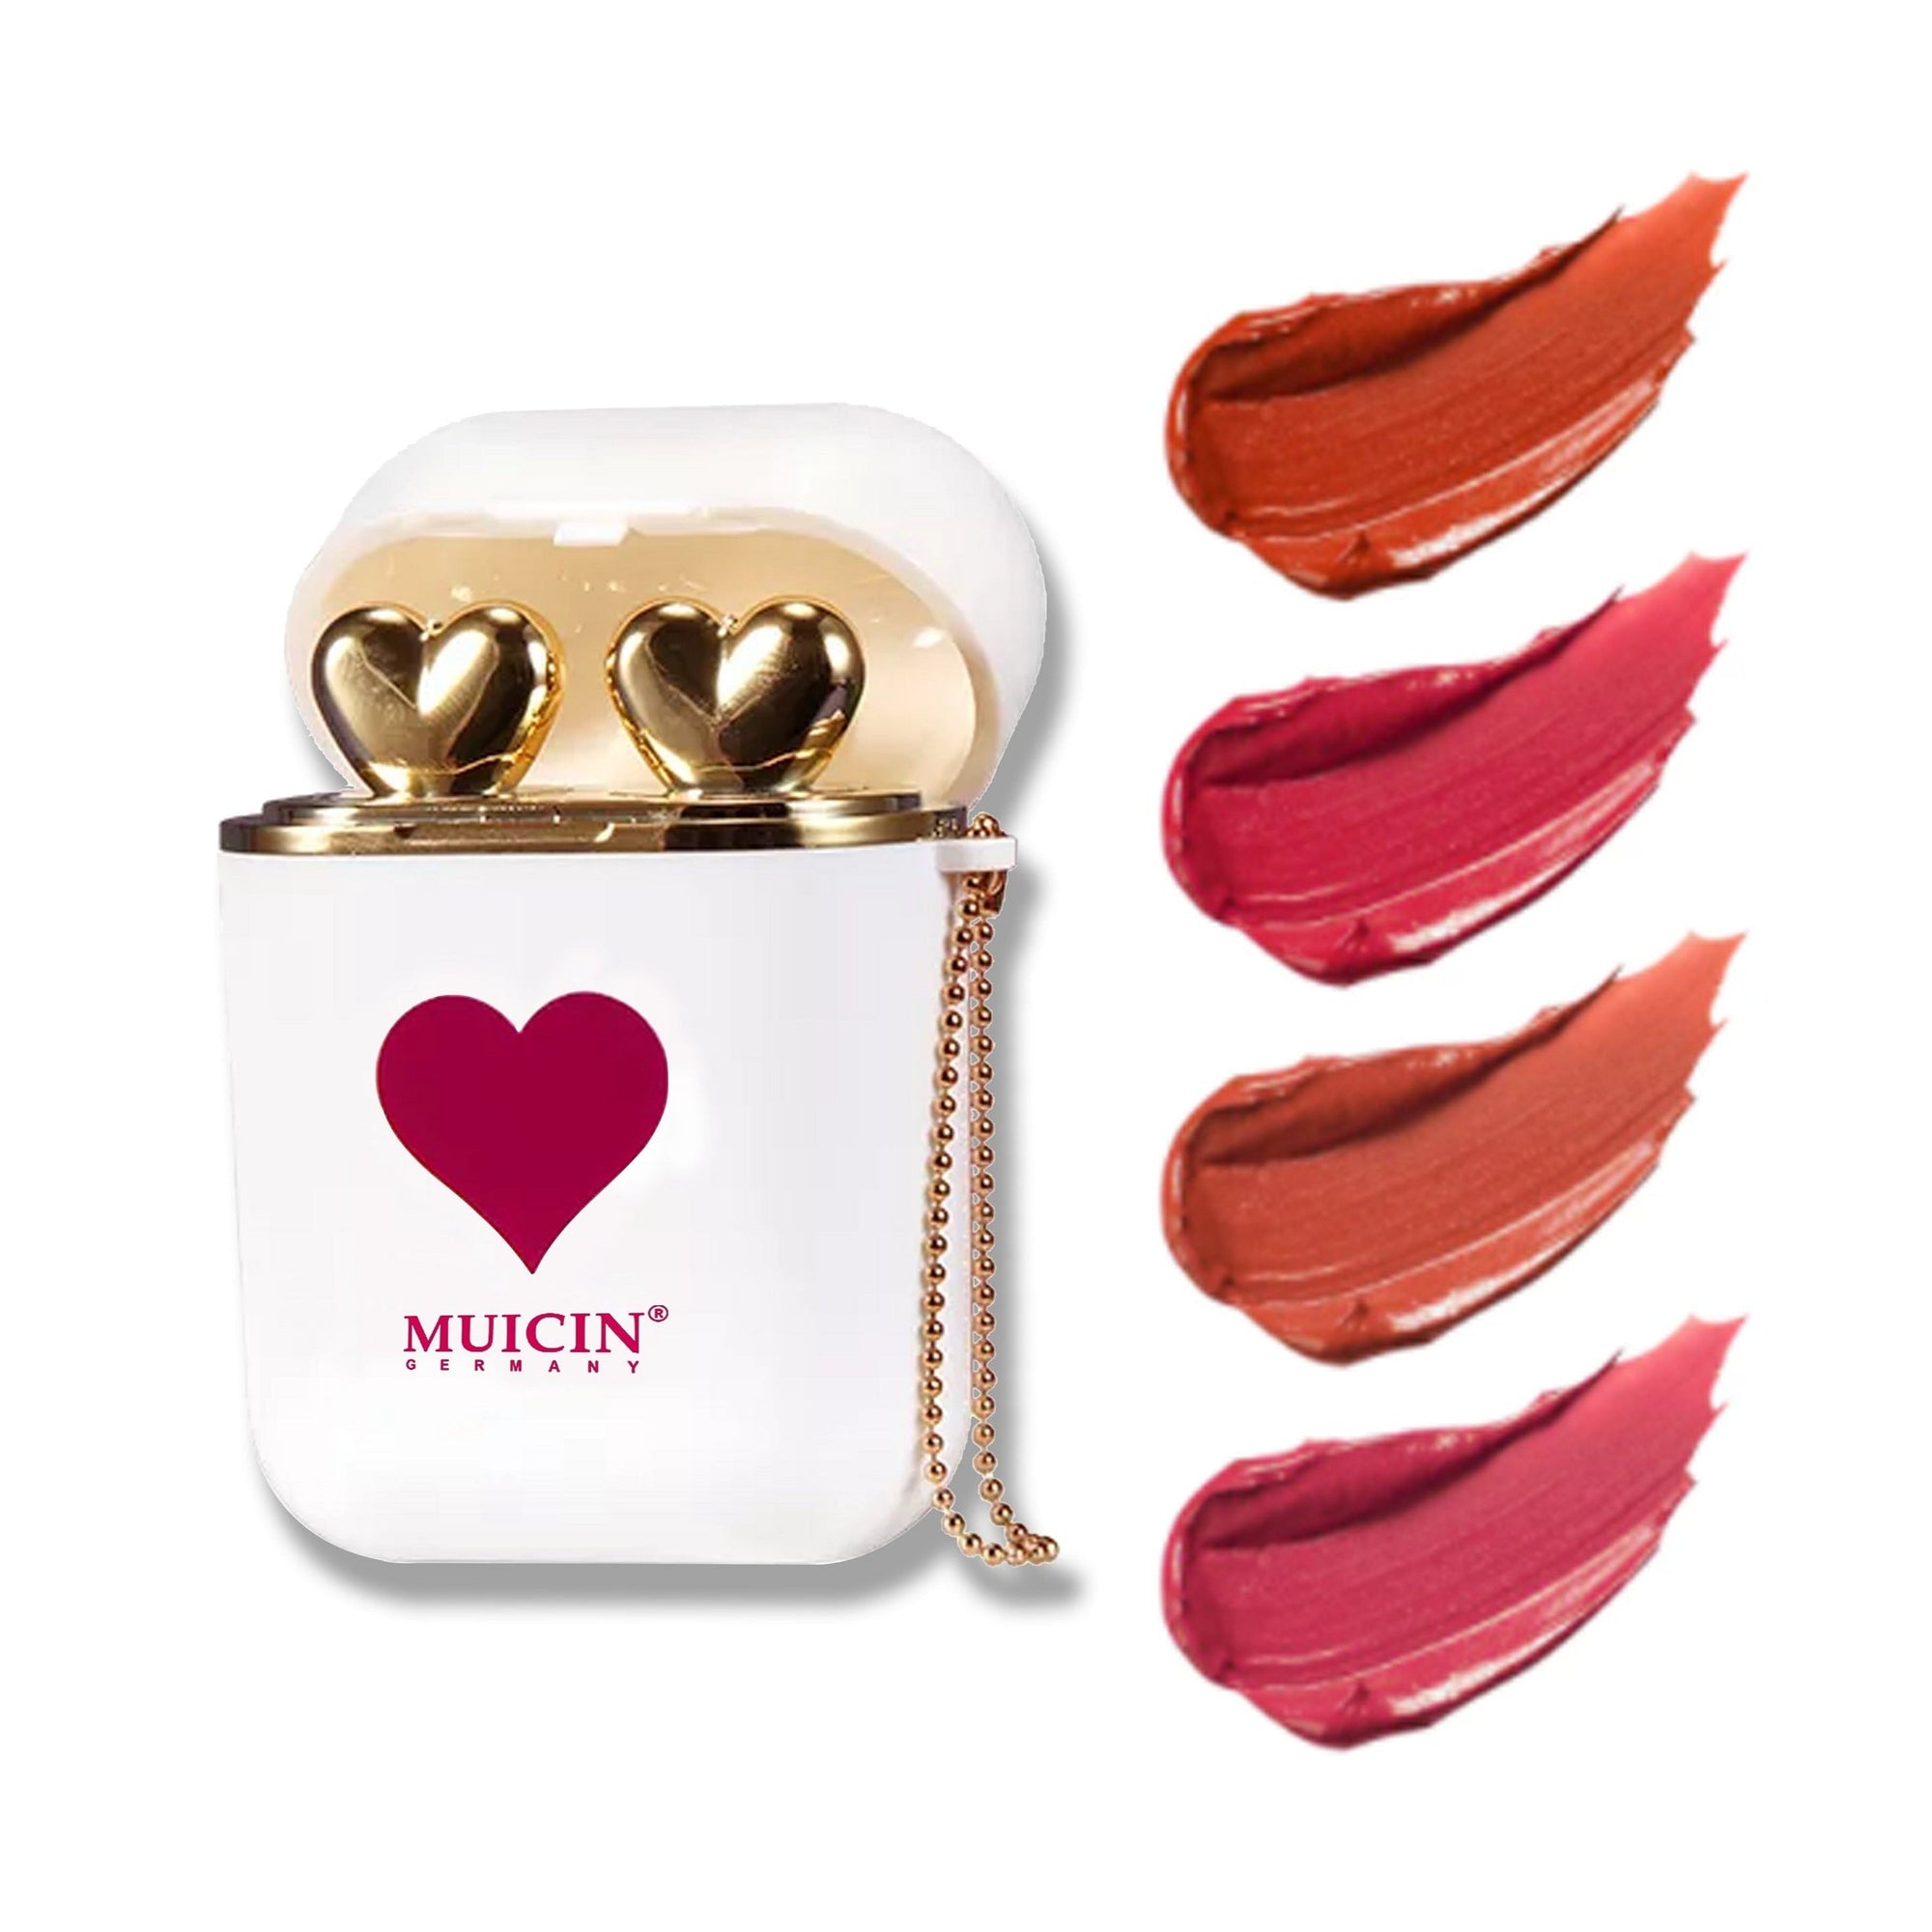 Buy  MUICIN - Heart Jelly Shine Lipstick Pods - at Best Price Online in Pakistan